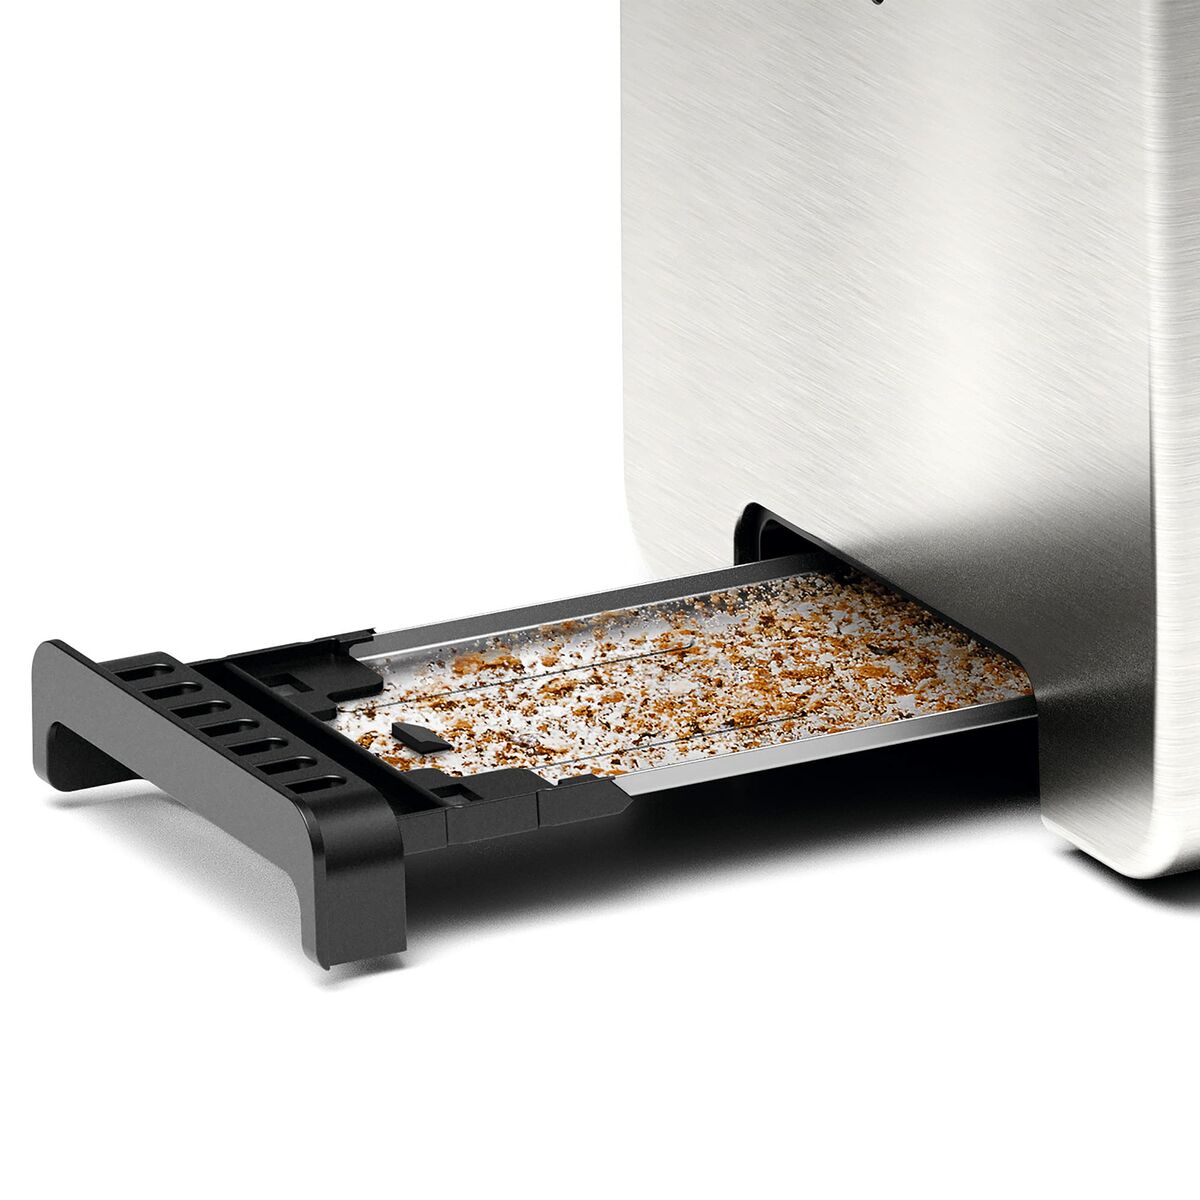 Toaster BOSCH TAT4P420 970W Schwarz/Silberfarben - CA International  